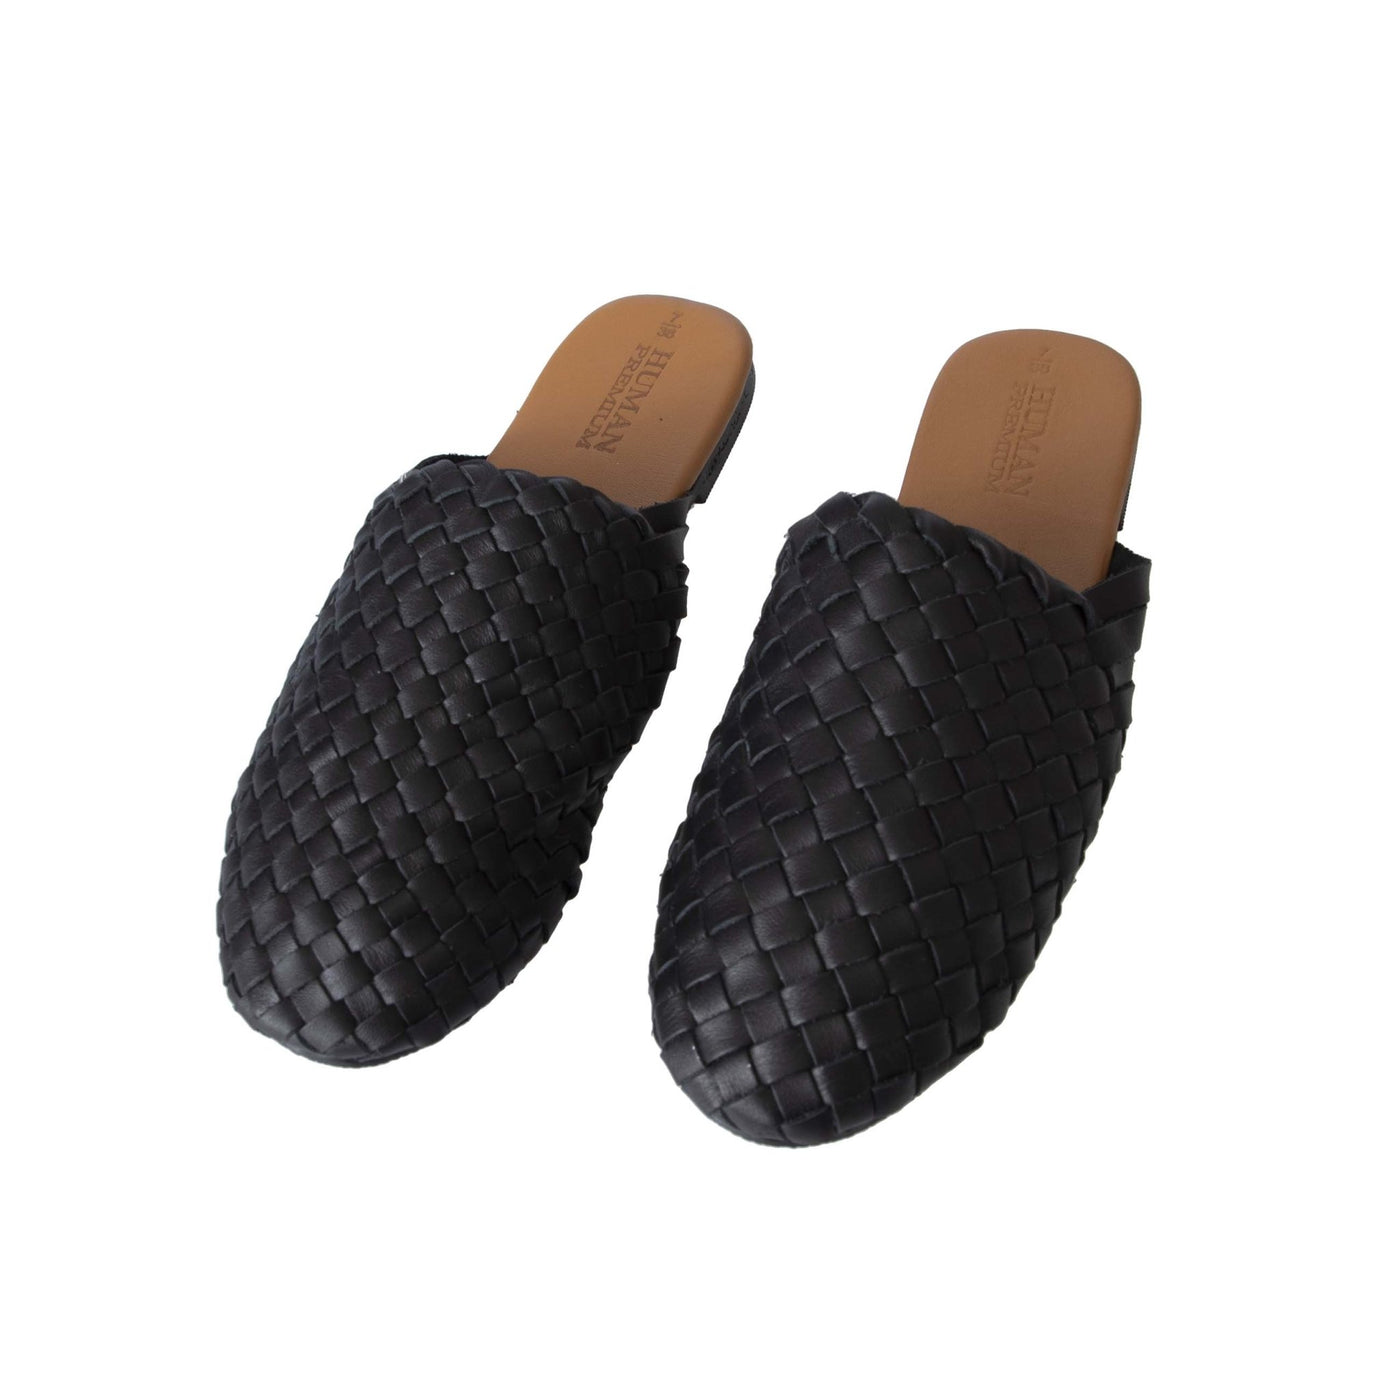 Human Shoes Barland Leather Slide in Black Weave - Hey Sara